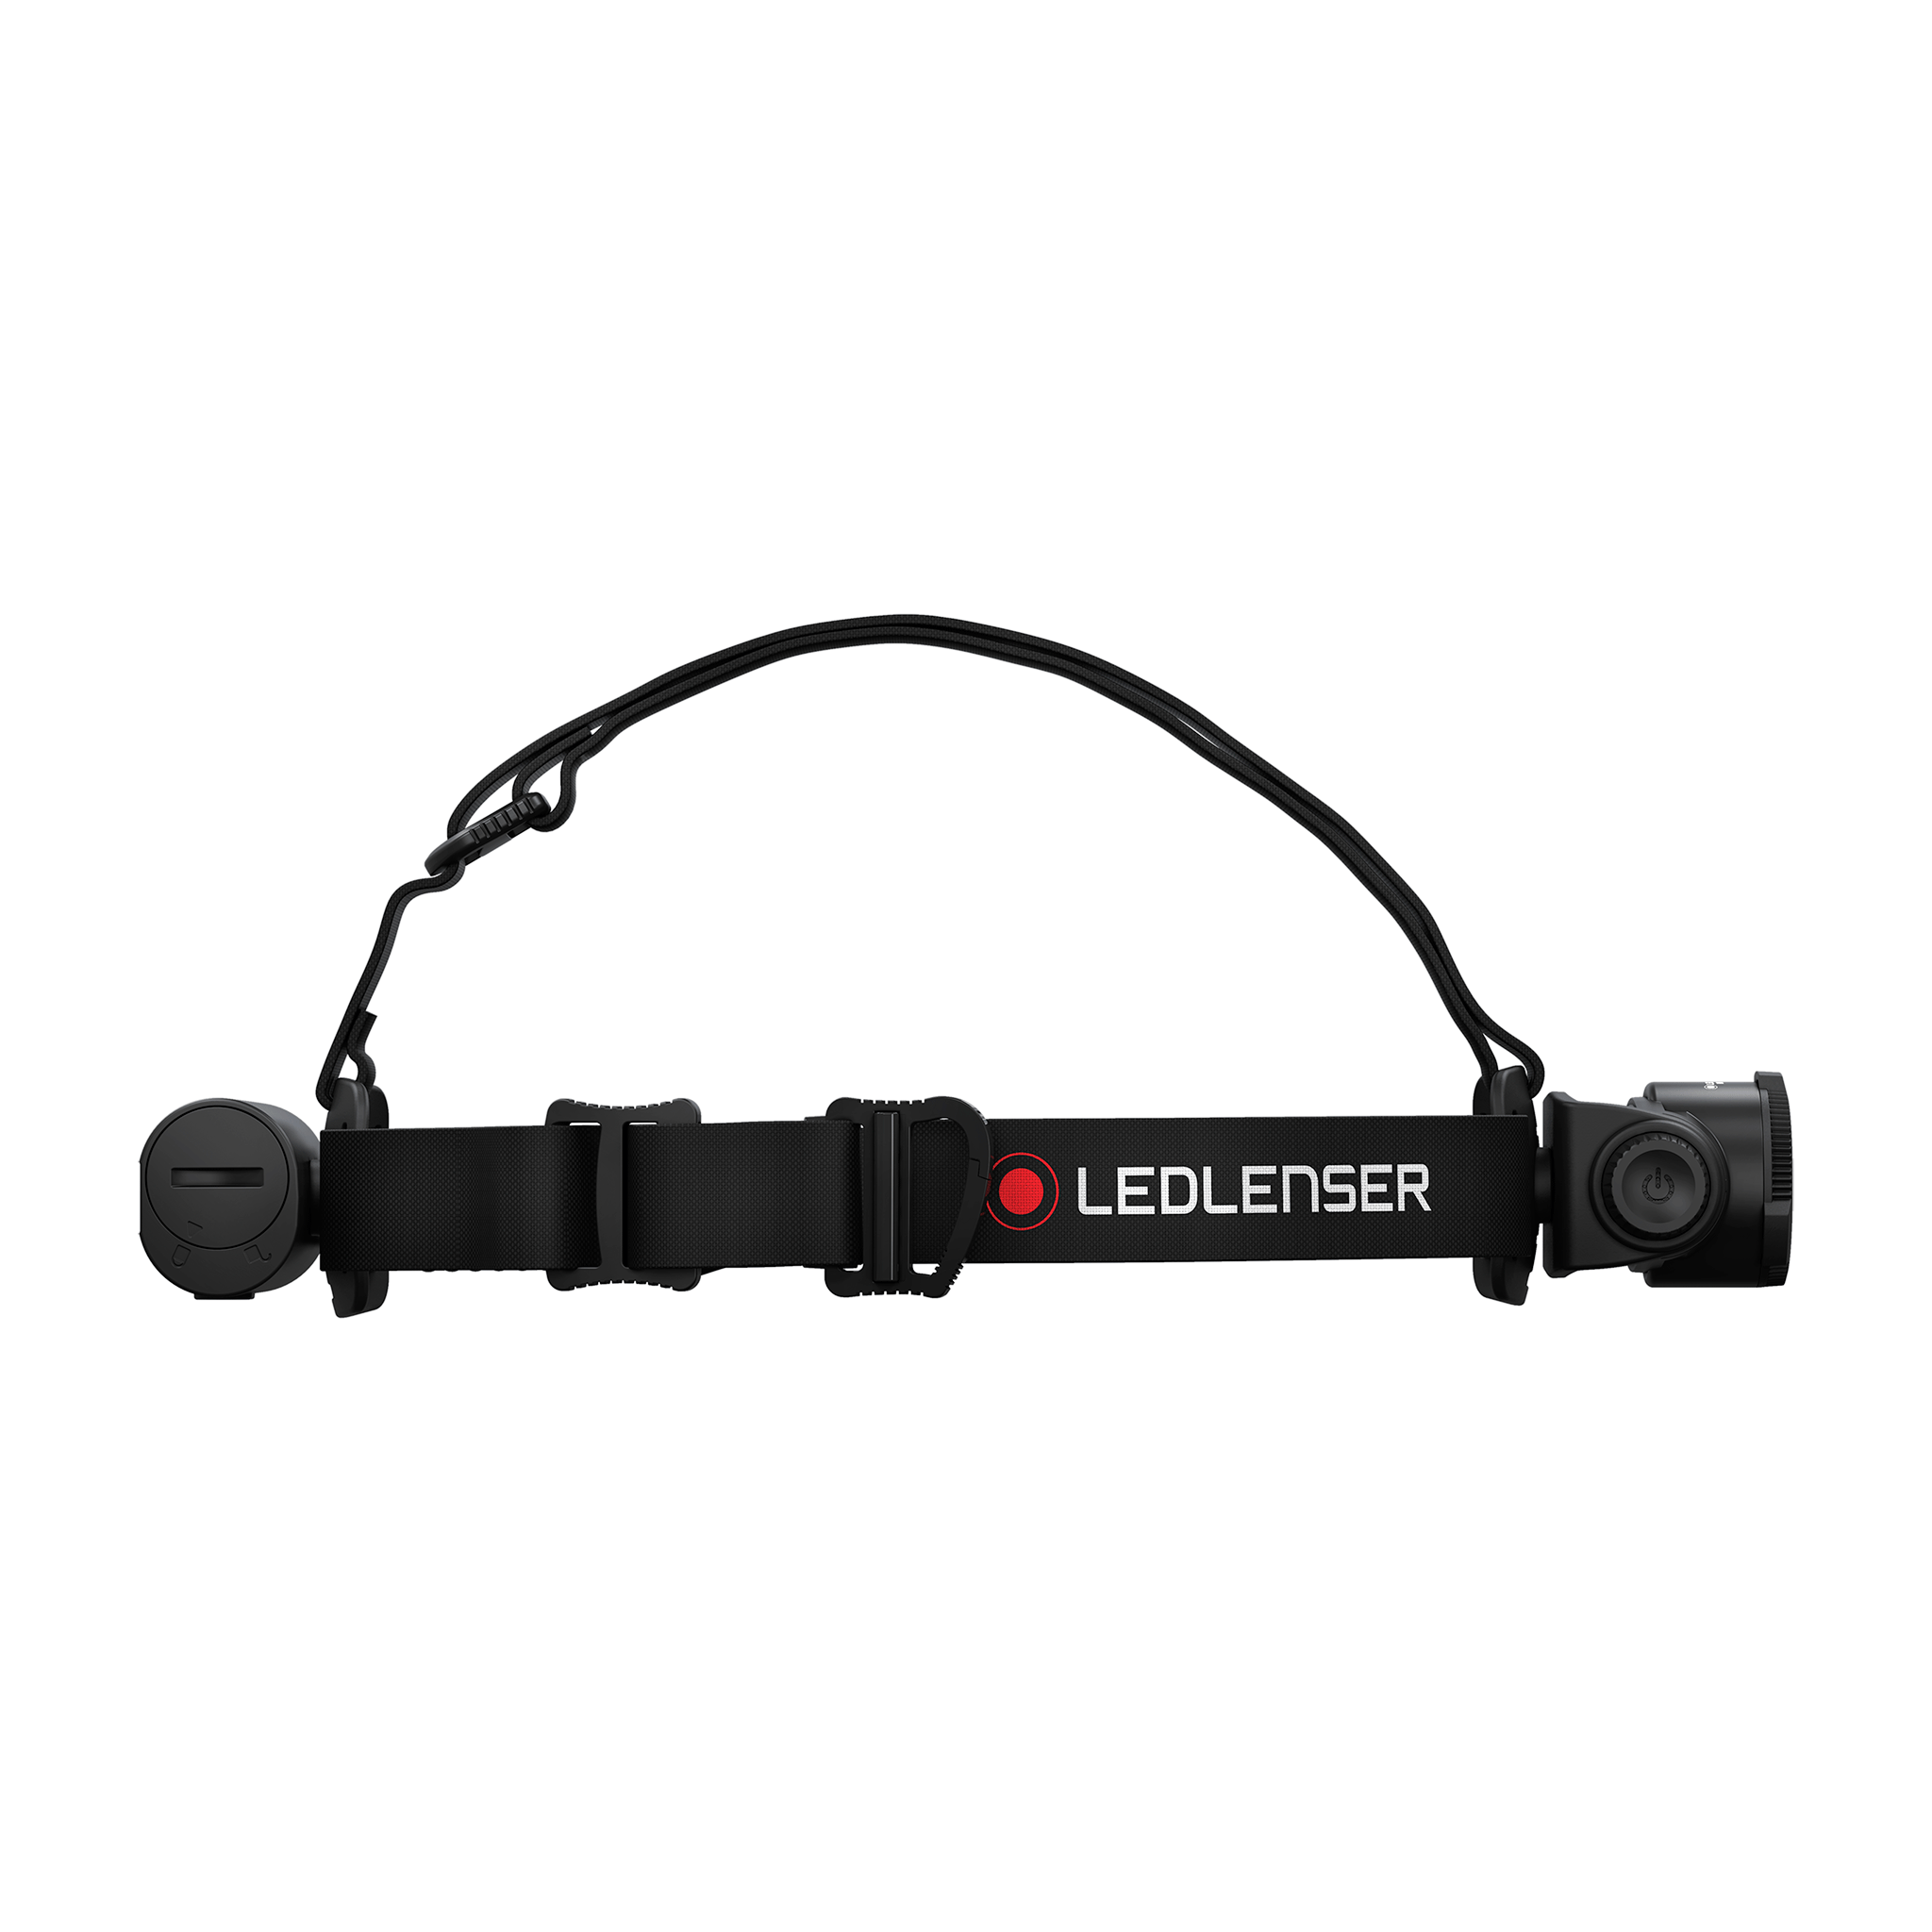 Ledlenser LED7298 H7R.2 Rechargeable Head Lamp - powerful 300 lumens and  160m beam range using advanced spot to flood optic - gives long range beam